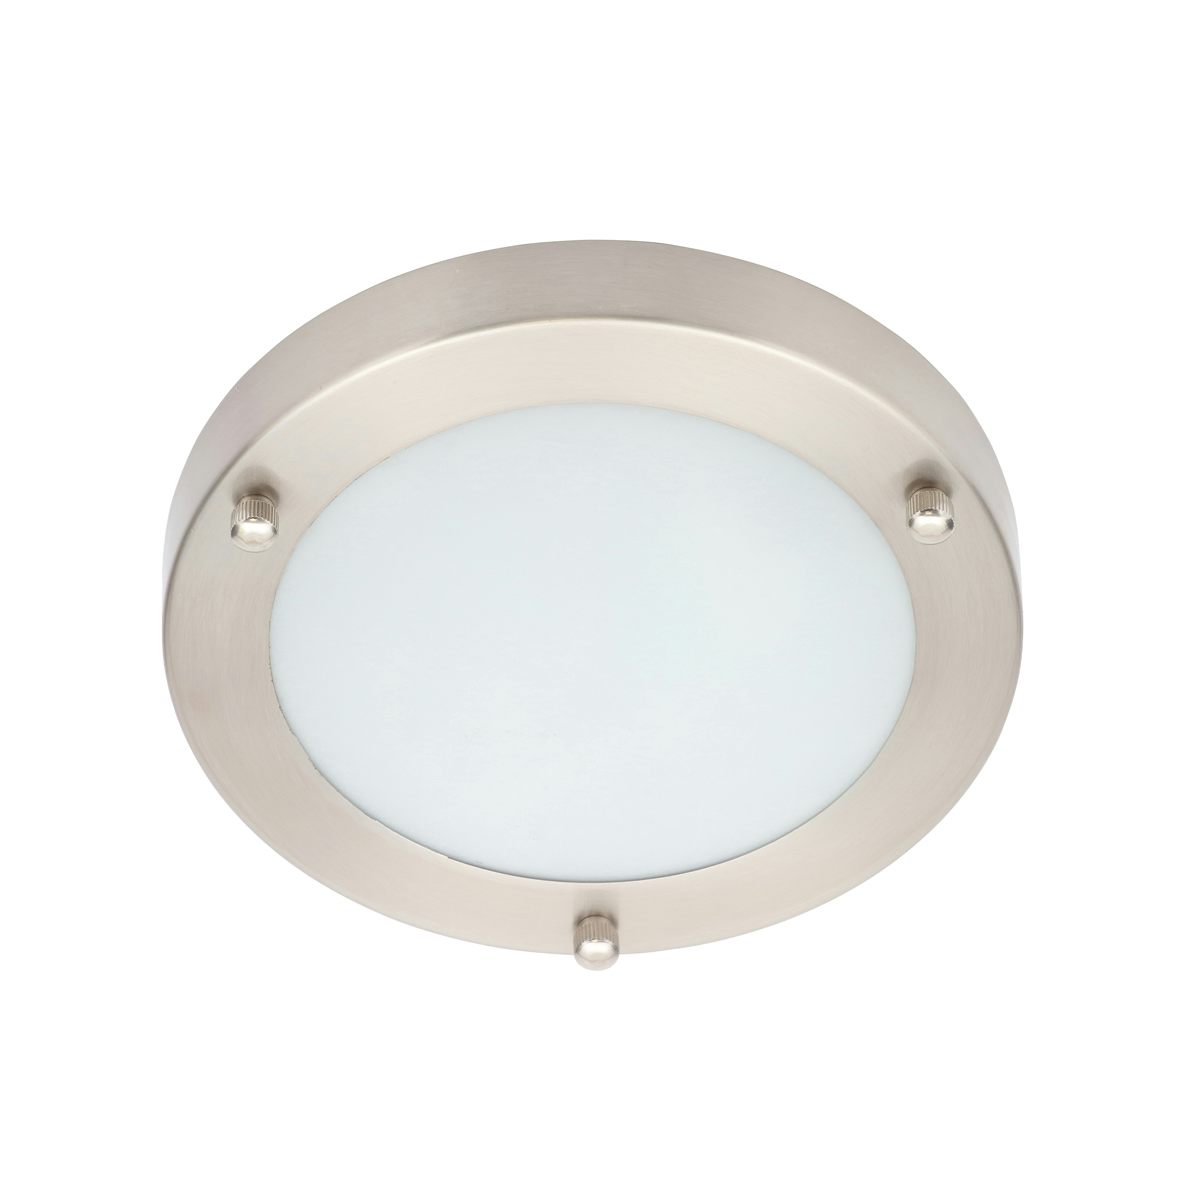 Forum Draco satin nickel small round flush bathroom ceiling light